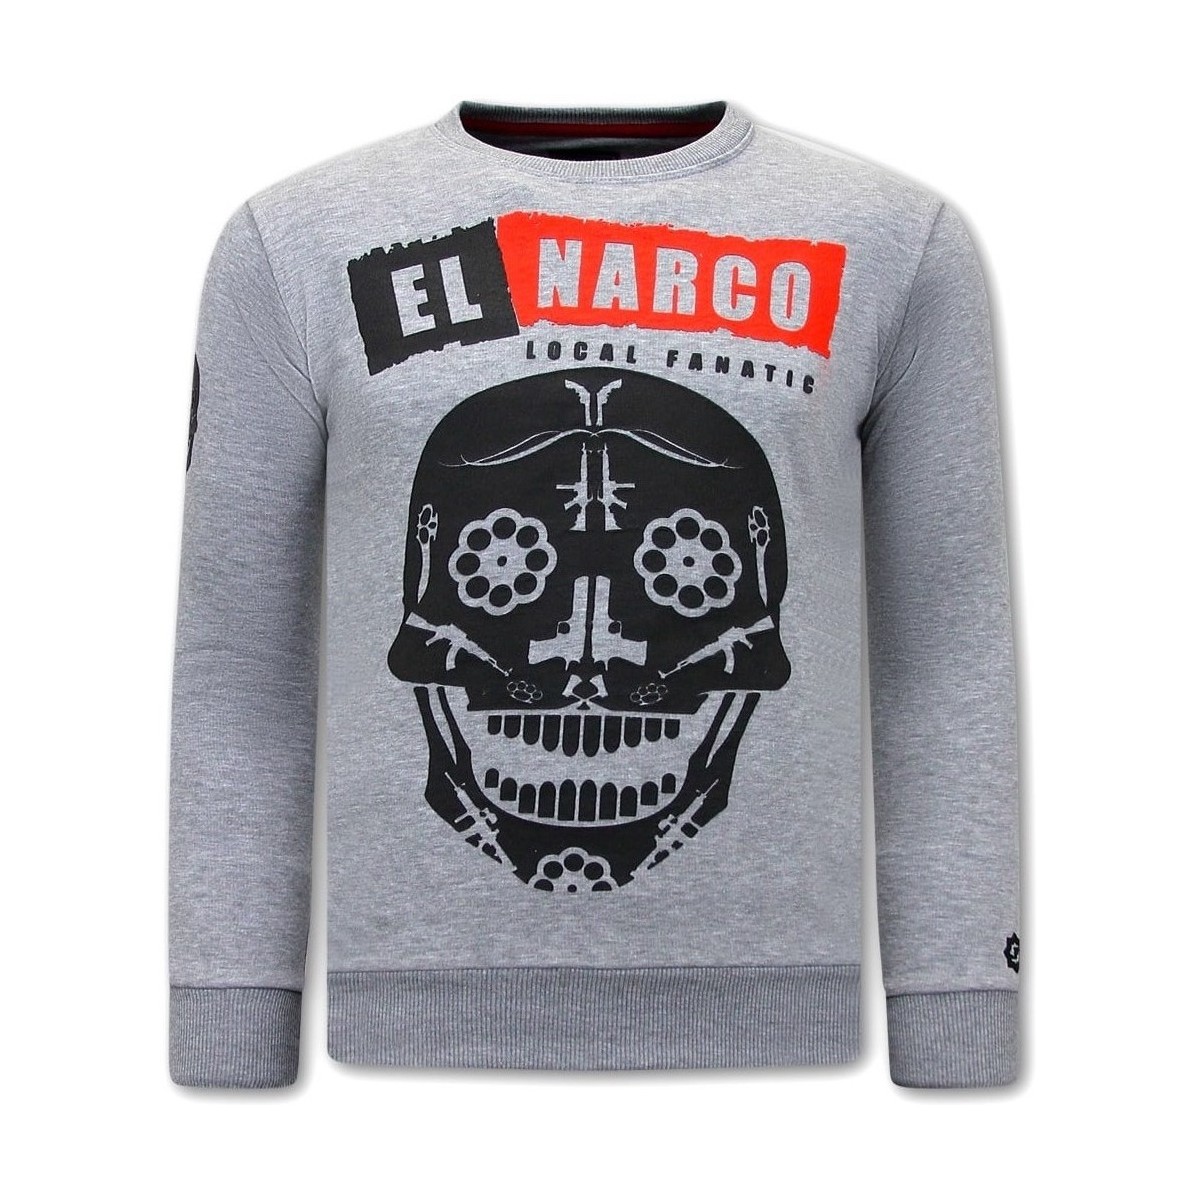 Textiel Heren Sweaters / Sweatshirts Local Fanatic Print El Narco Grijs